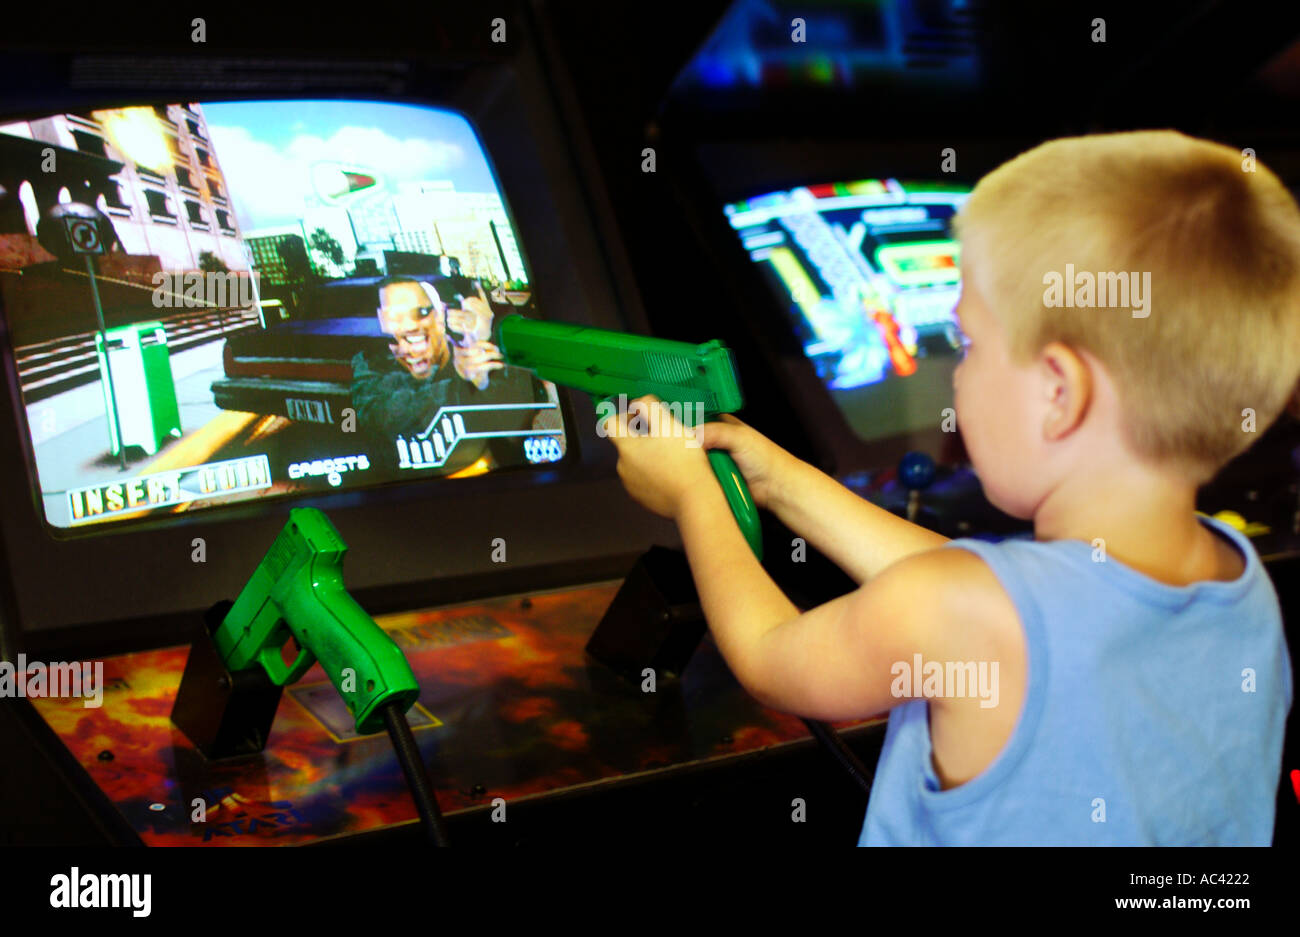 Young boy aiming toy gun at arcade game screen Stock Photo